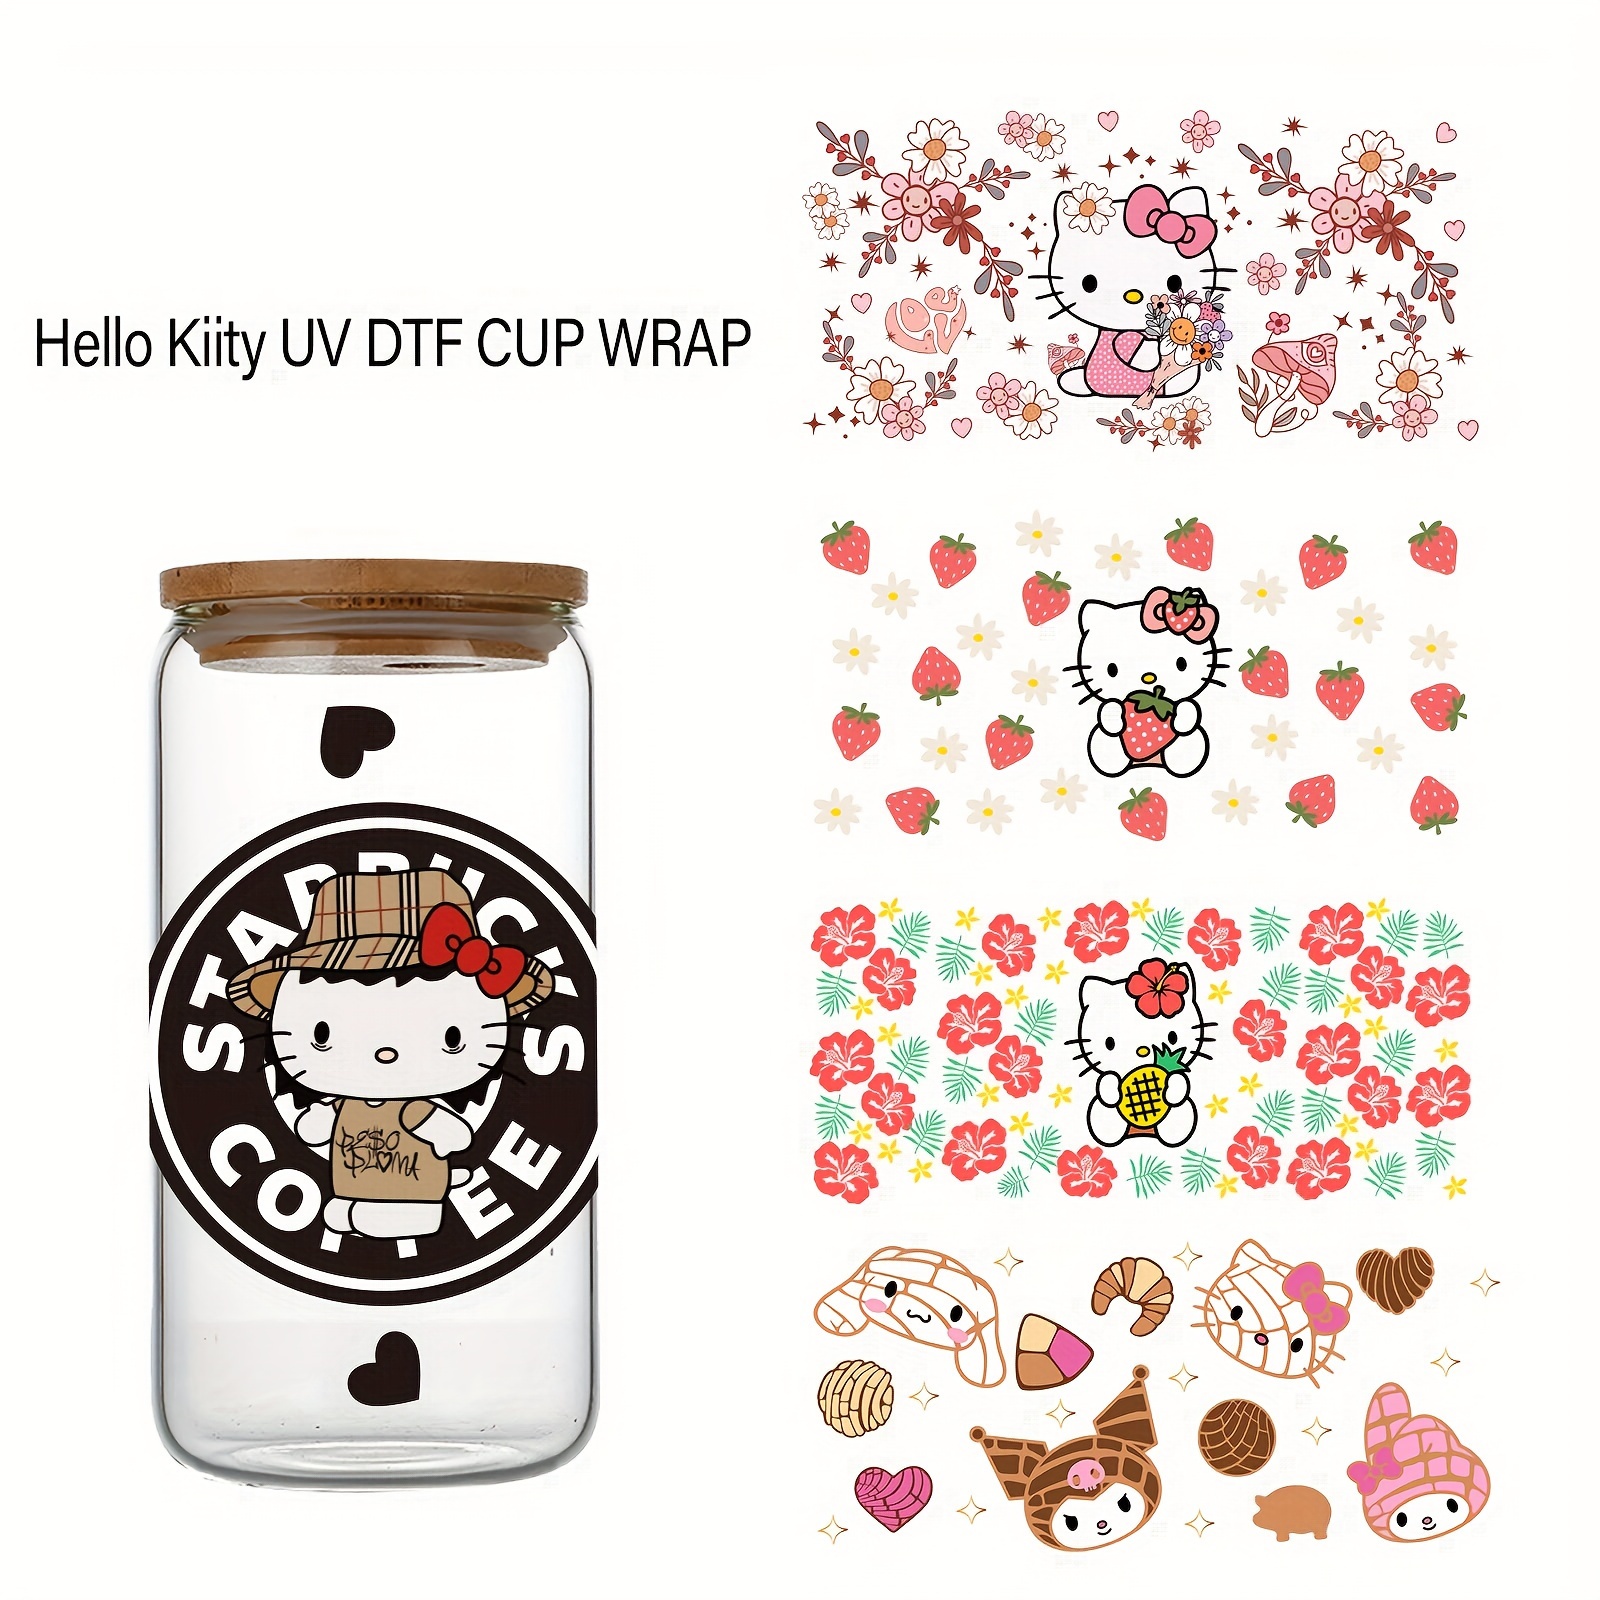 1 Piece UV DTF Cup Wrap, Transfer Stickers for Glass Uv DTF Pokemon group